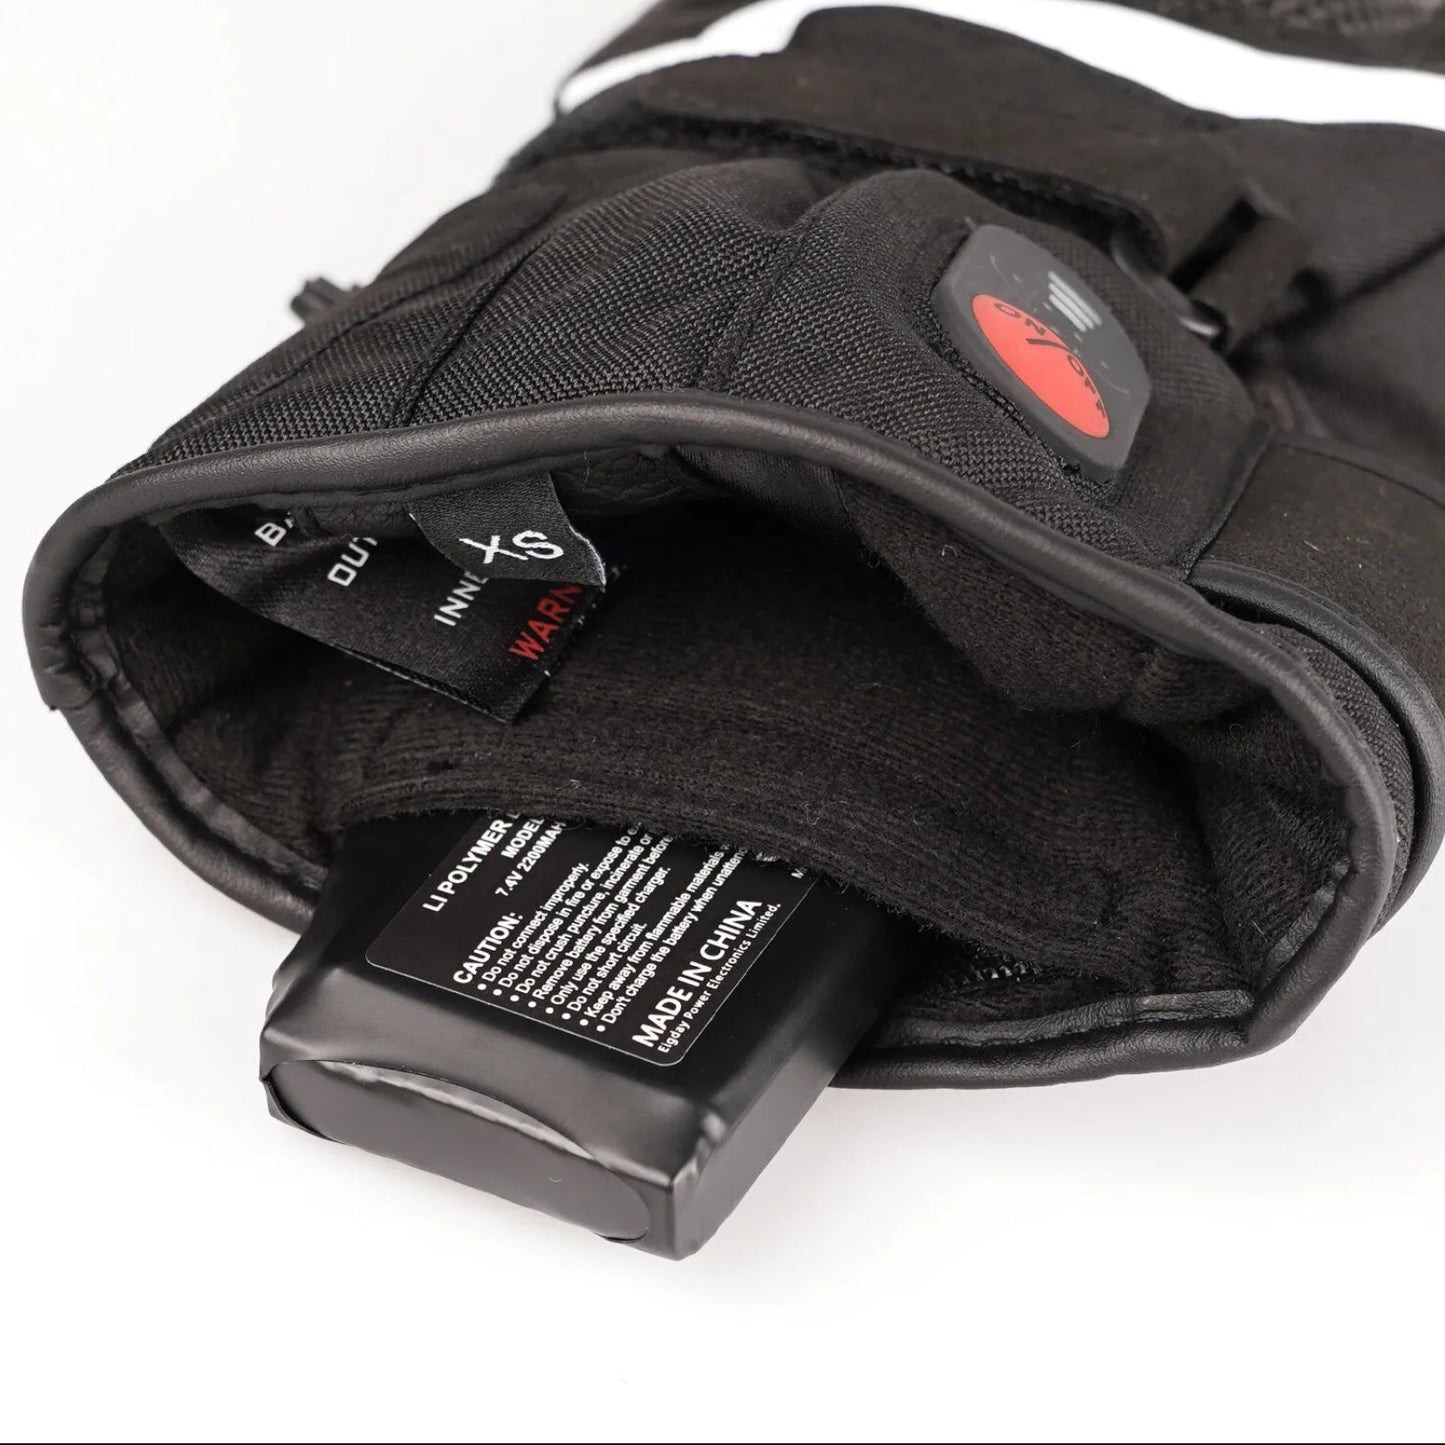 Battery Pack For IcePro1, IcePro2 and IcePro3 Heated Gloves 2200mAh 7.2V - Icespheric